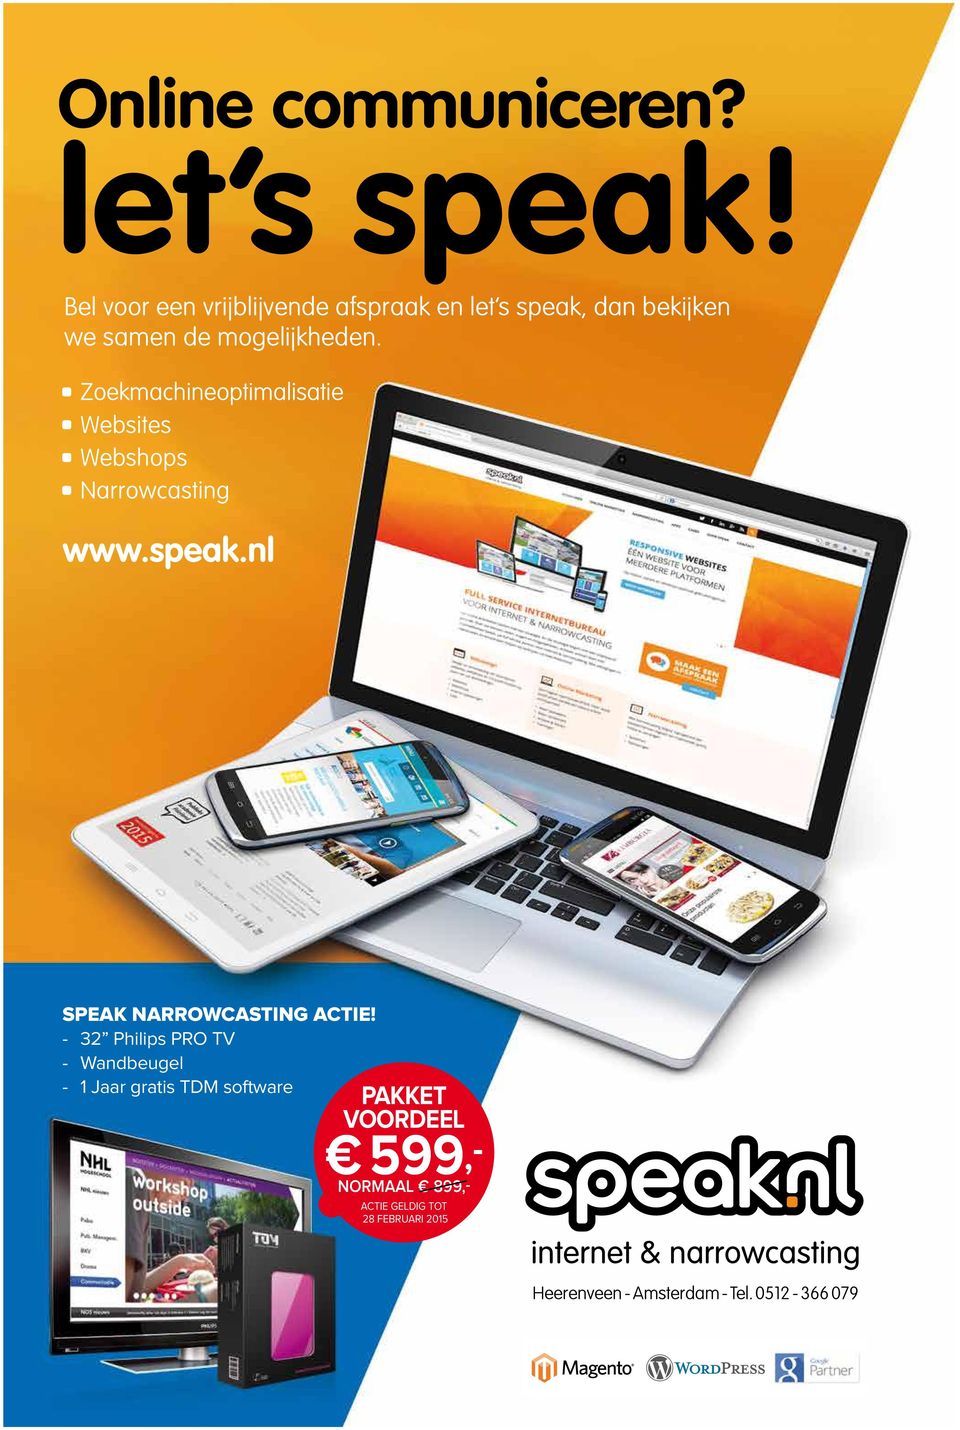 Zoekmachineoptimalisatie Websites Webshops Narrowcasting www.speak.nl SPEAK NARROWCASTING ACTIE!